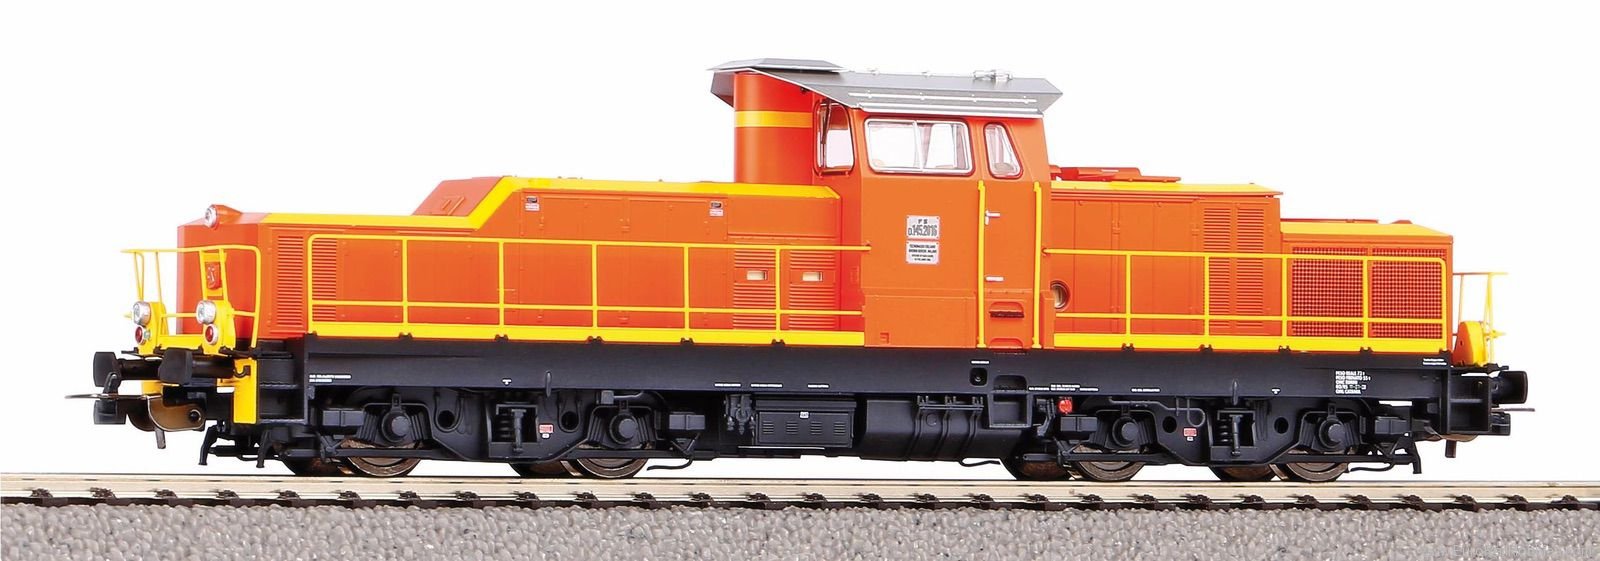 Piko 52844 FS D.145 2016 Diesel Locomotive (Piko Expert)